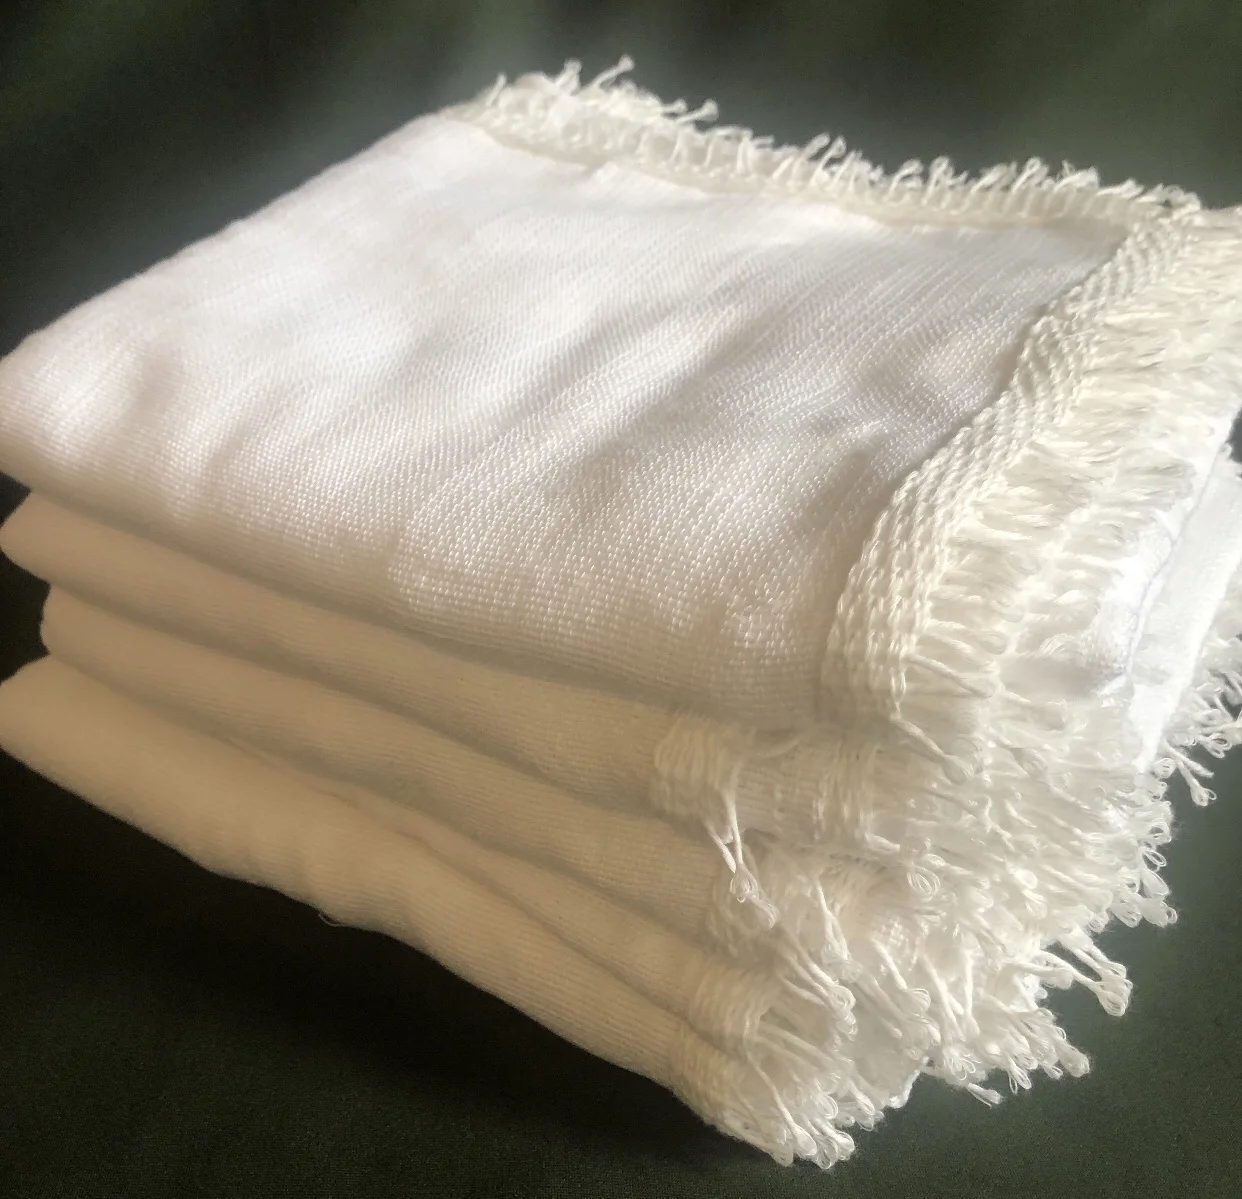 Ilocos blanket, inabel, cotton blanket, handwoven, double 50x86” approximately